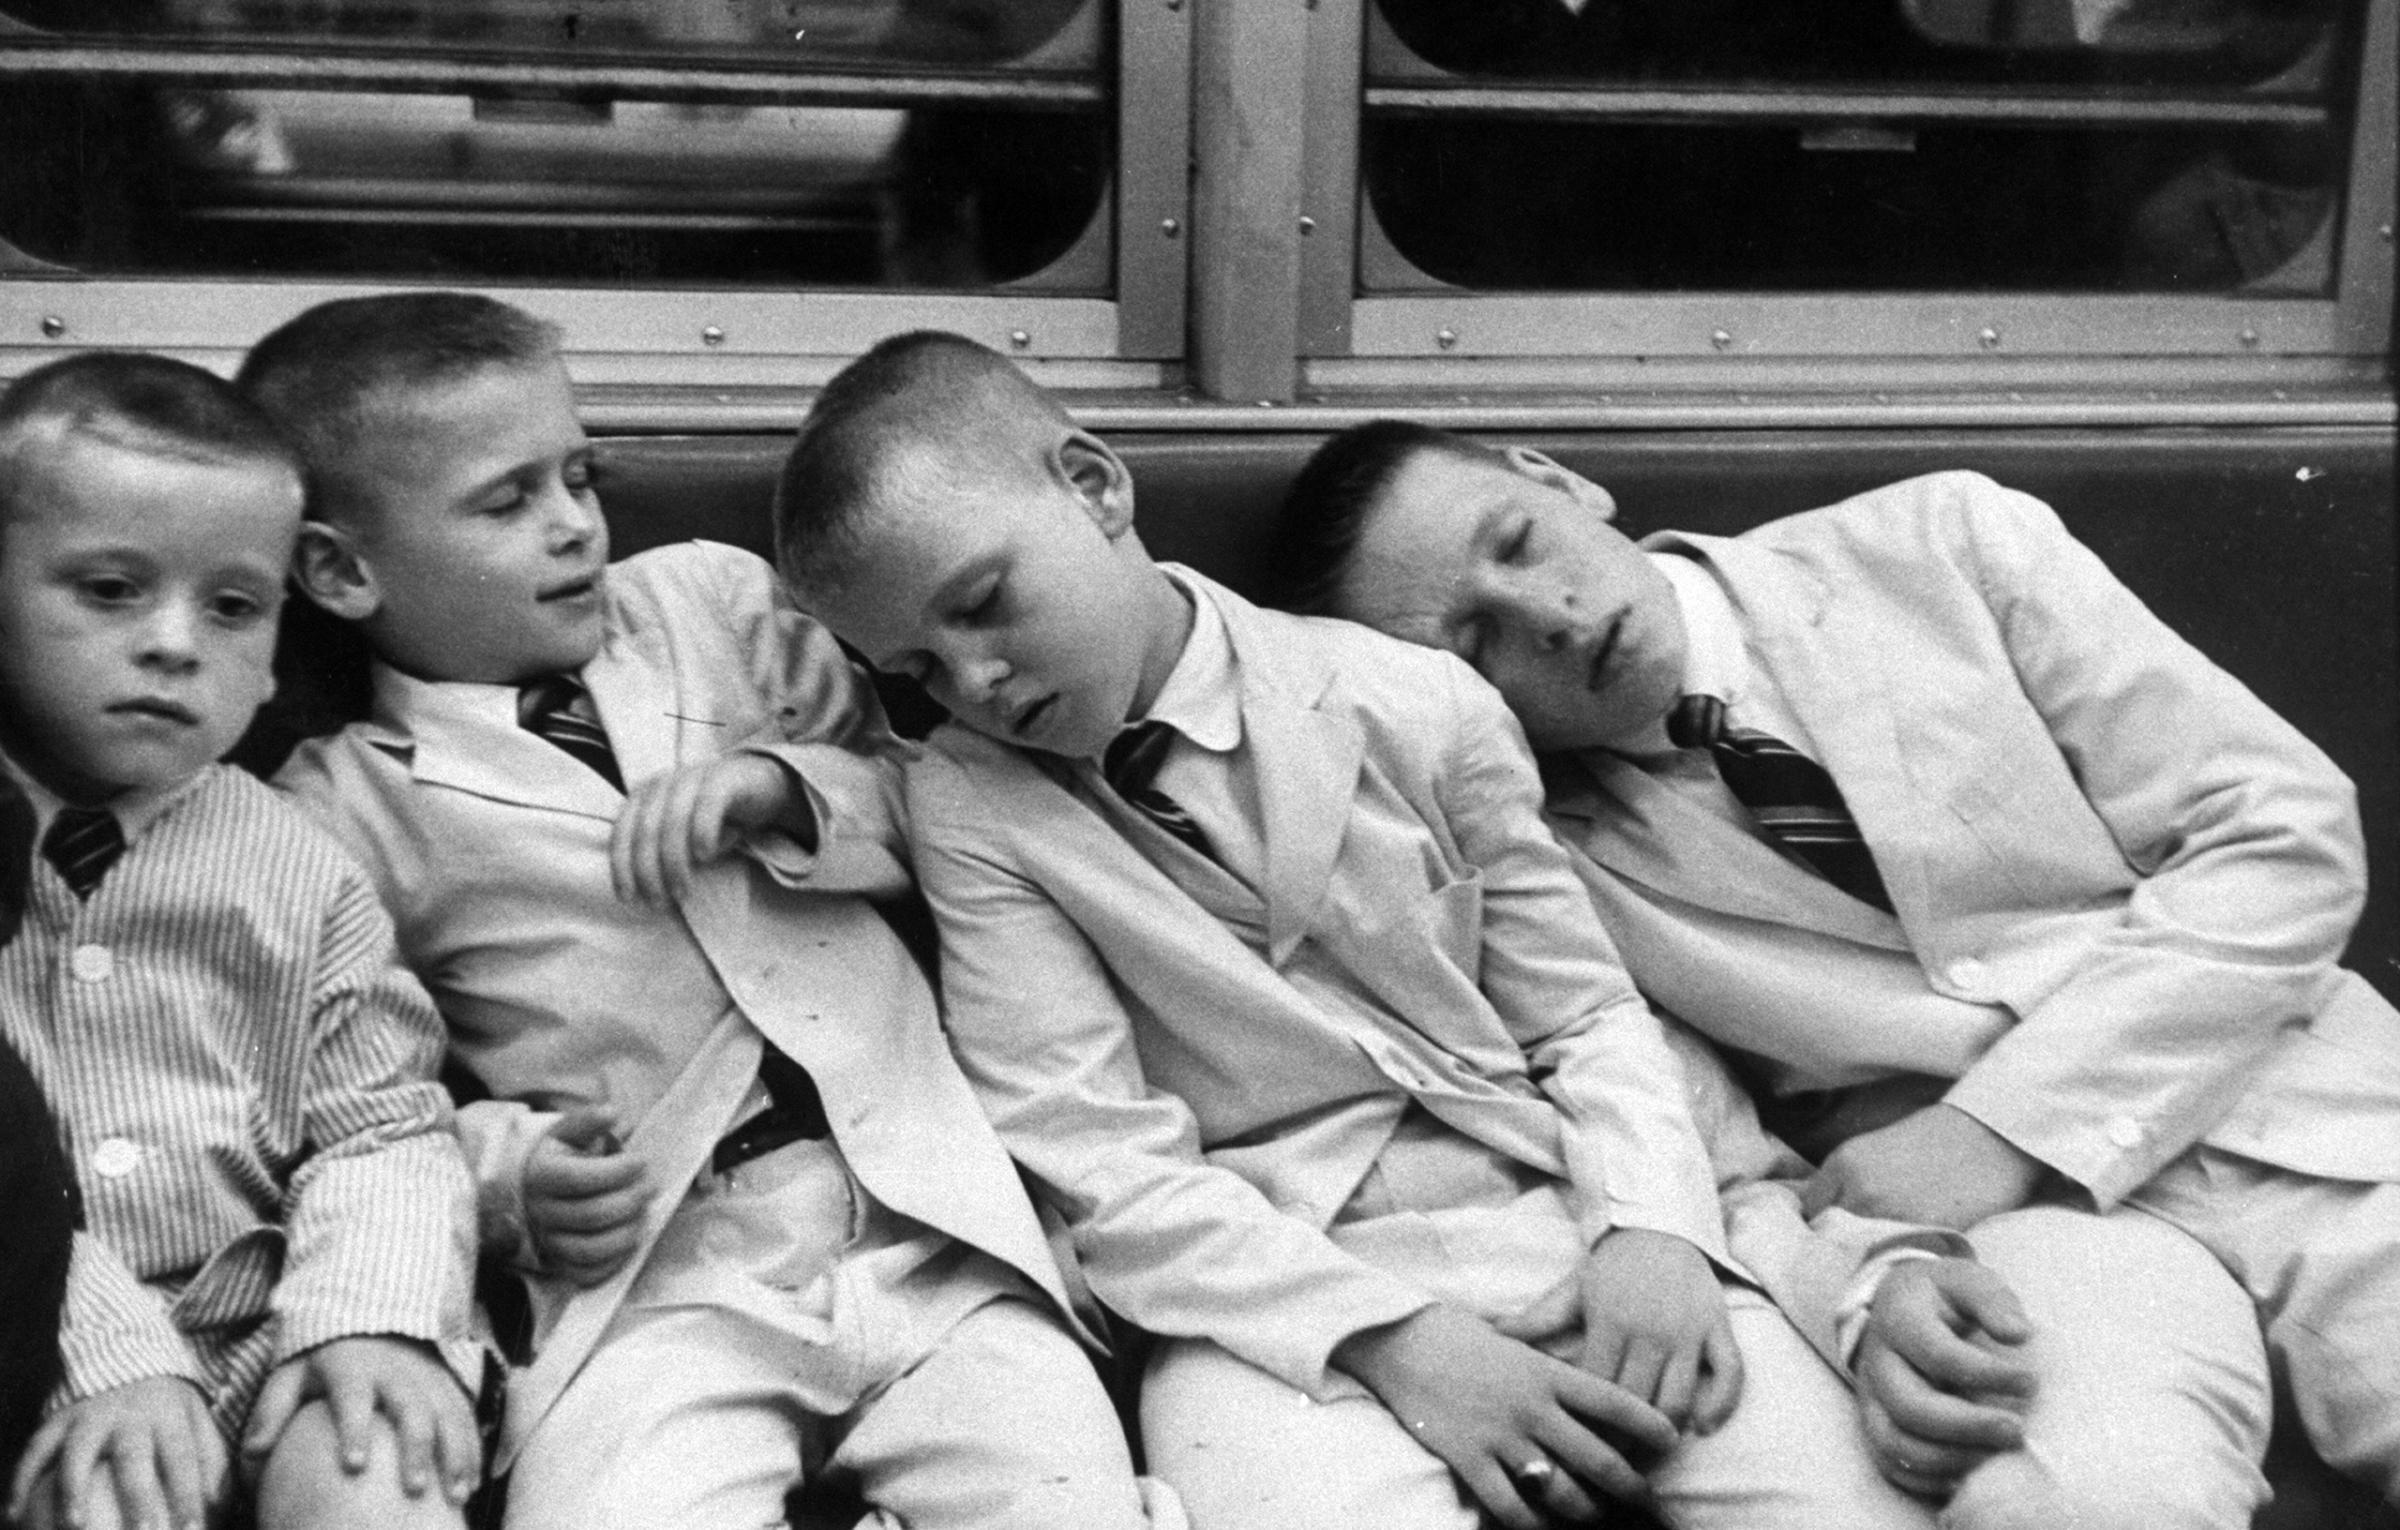 Little boys sleeping on a subway car in New York, NY, 1959.